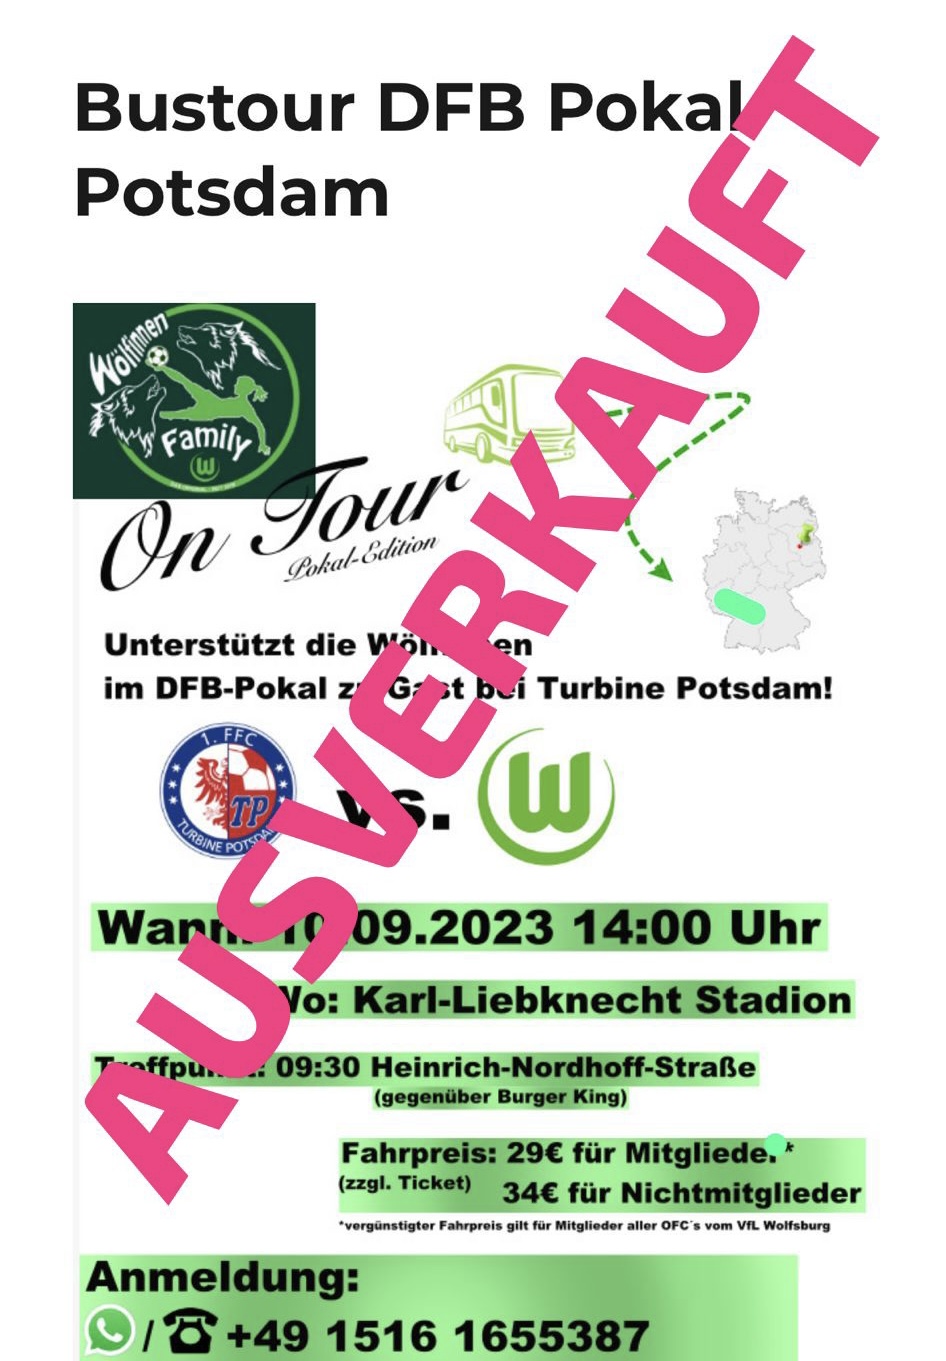 Bustour DFB Pokal Potsdam